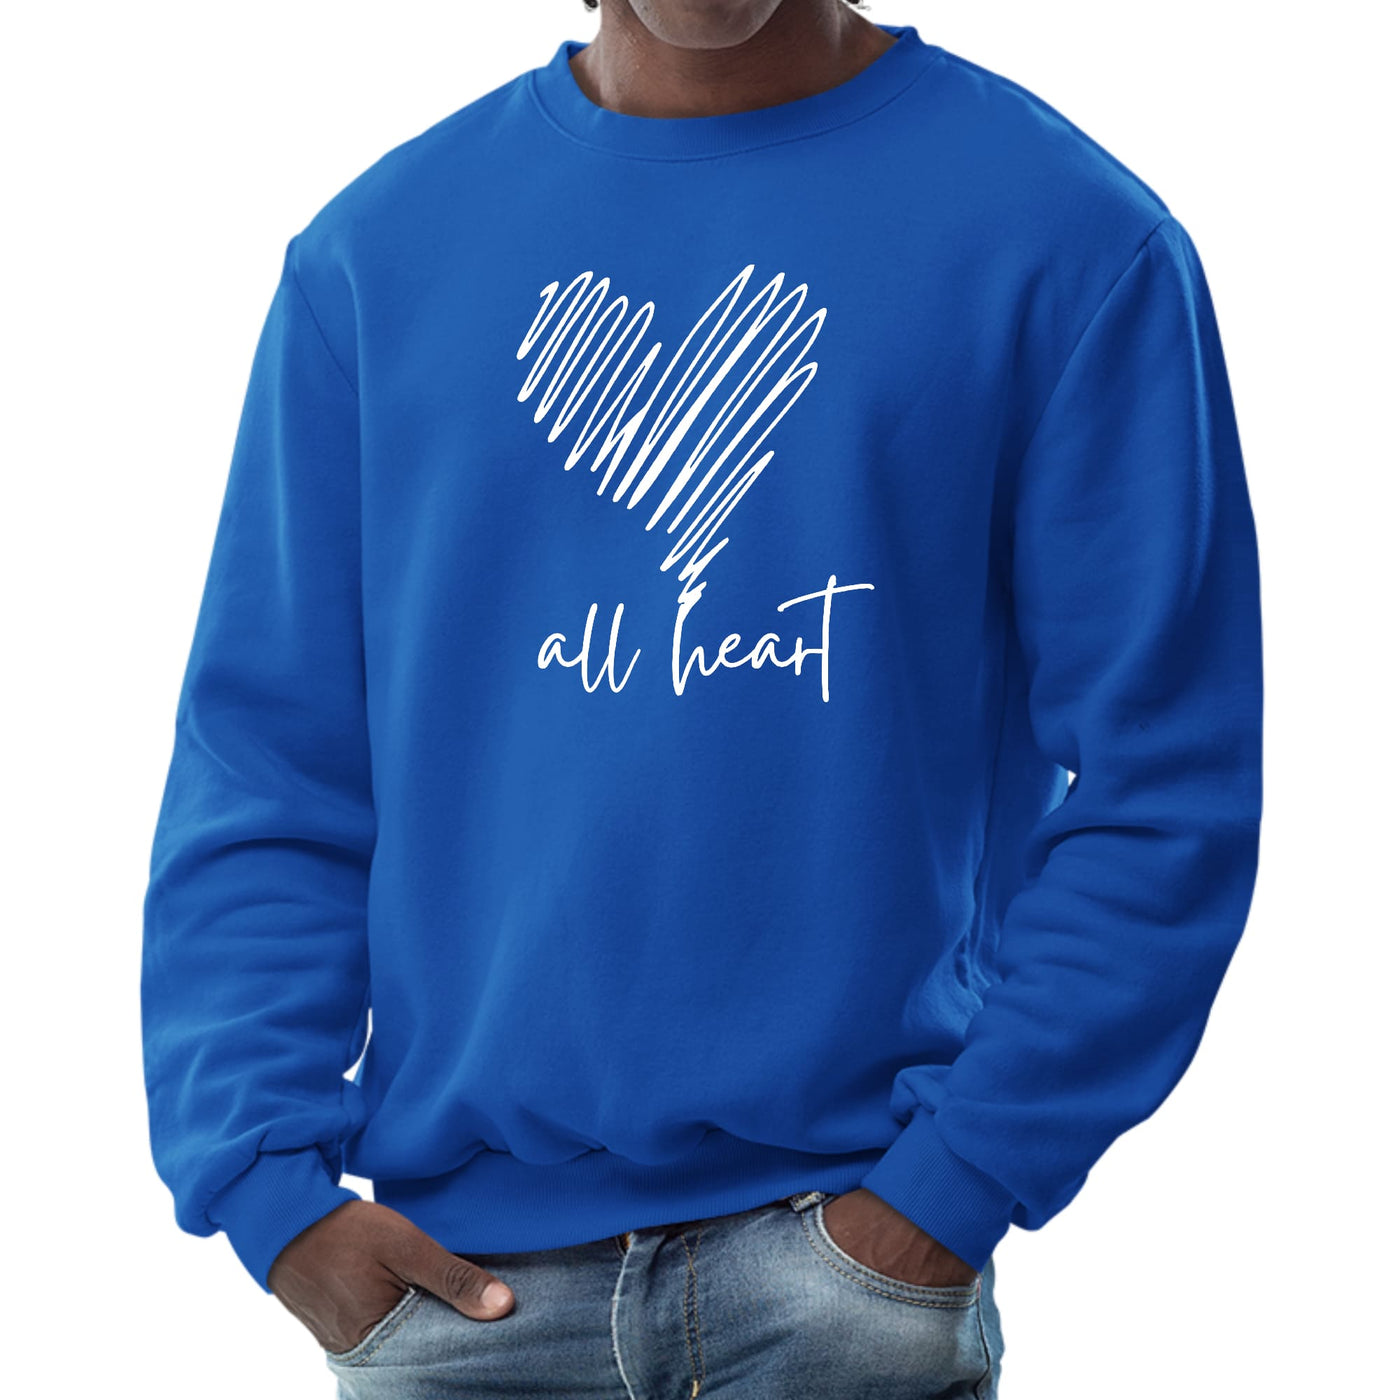 Mens Long Sleeve Graphic Sweatshirt Say It Soul - All Heart Line Art - Mens